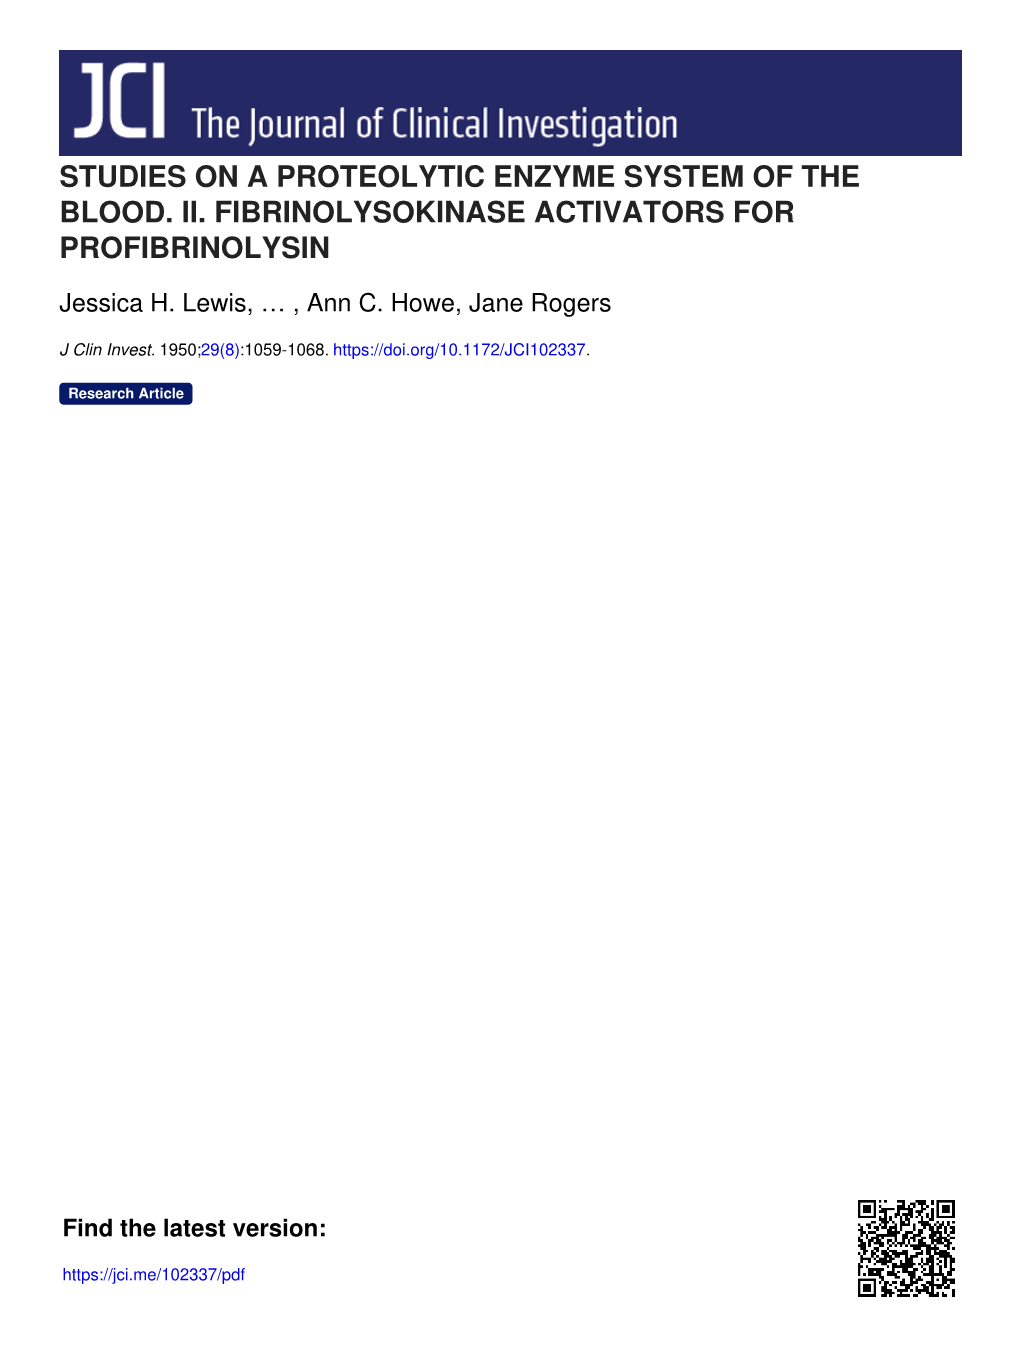 Studies on a Proteolytic Enzyme System of the Blood. Ii. Fibrinolysokinase Activators for Profibrinolysin